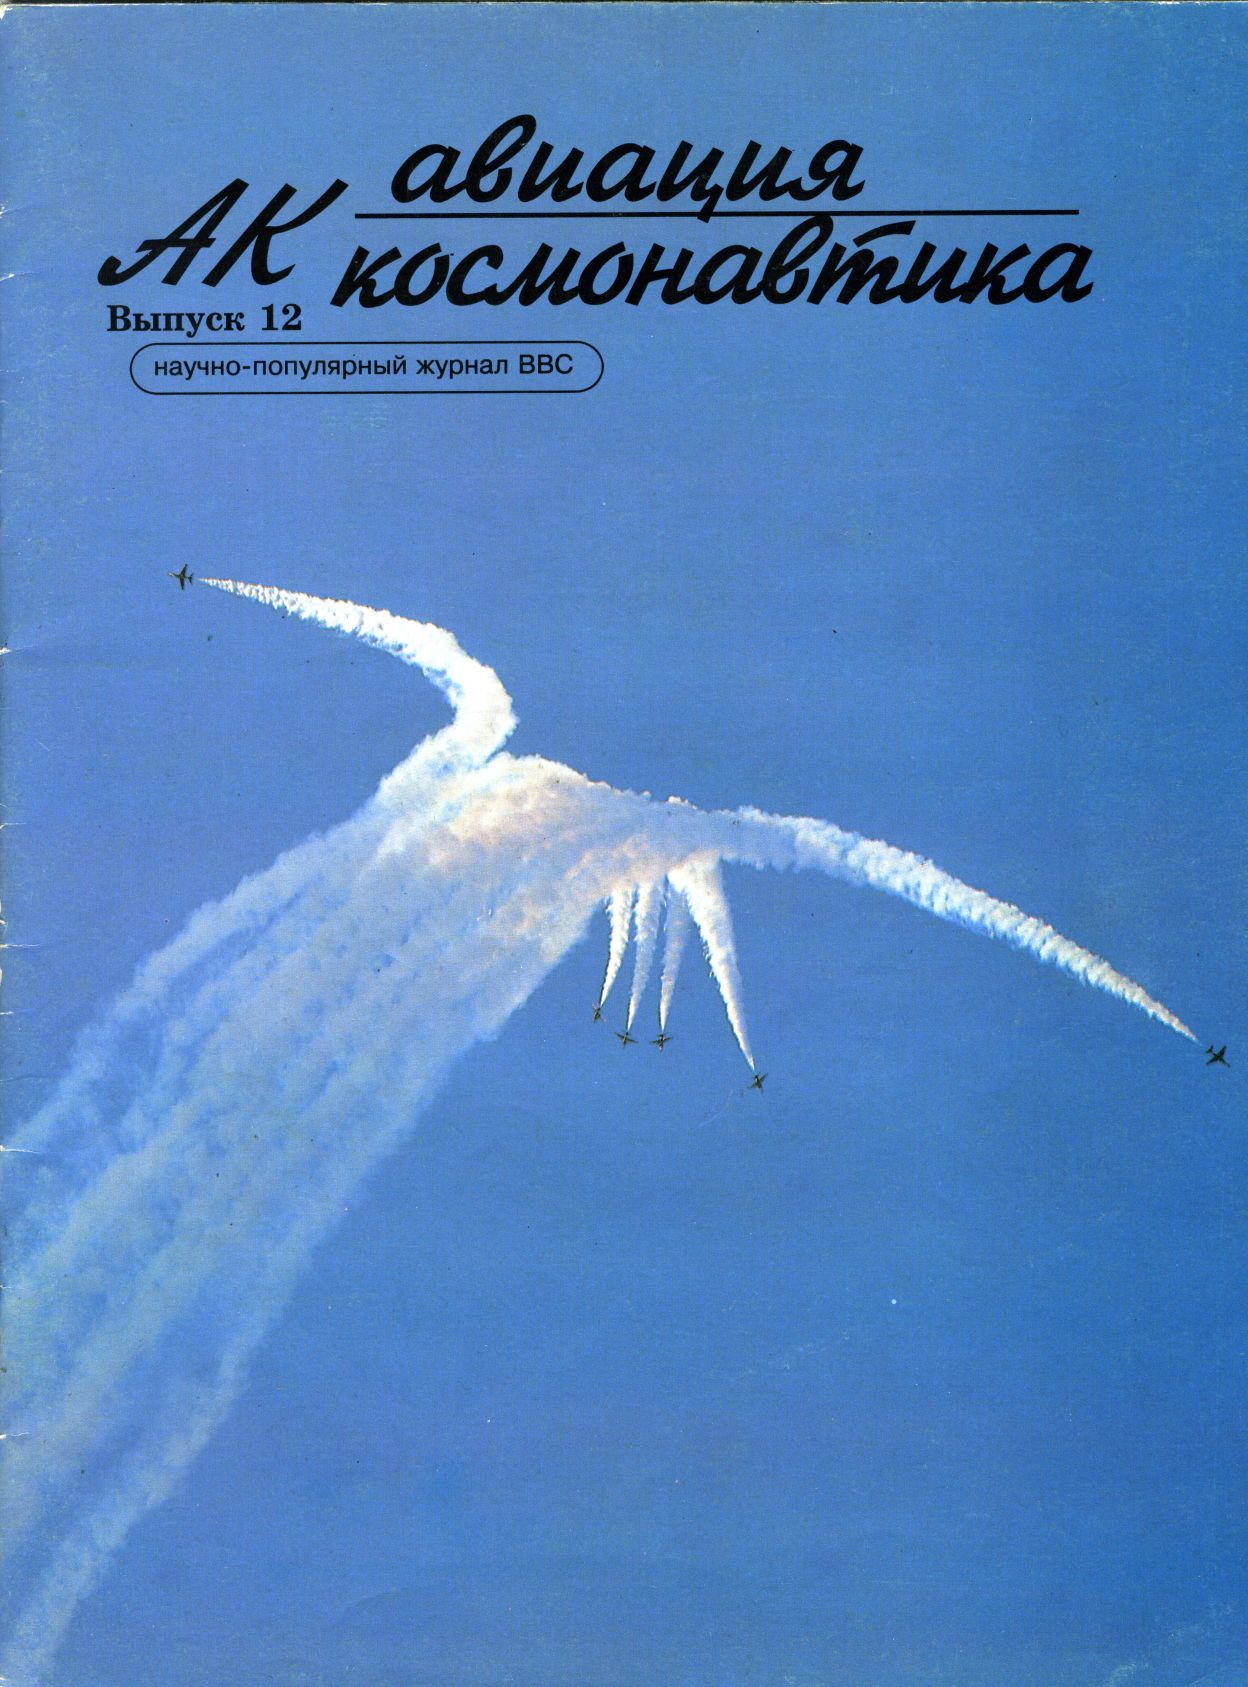  Авиация и космонавтика Журнал: Авиация и космонавтика 1996 01